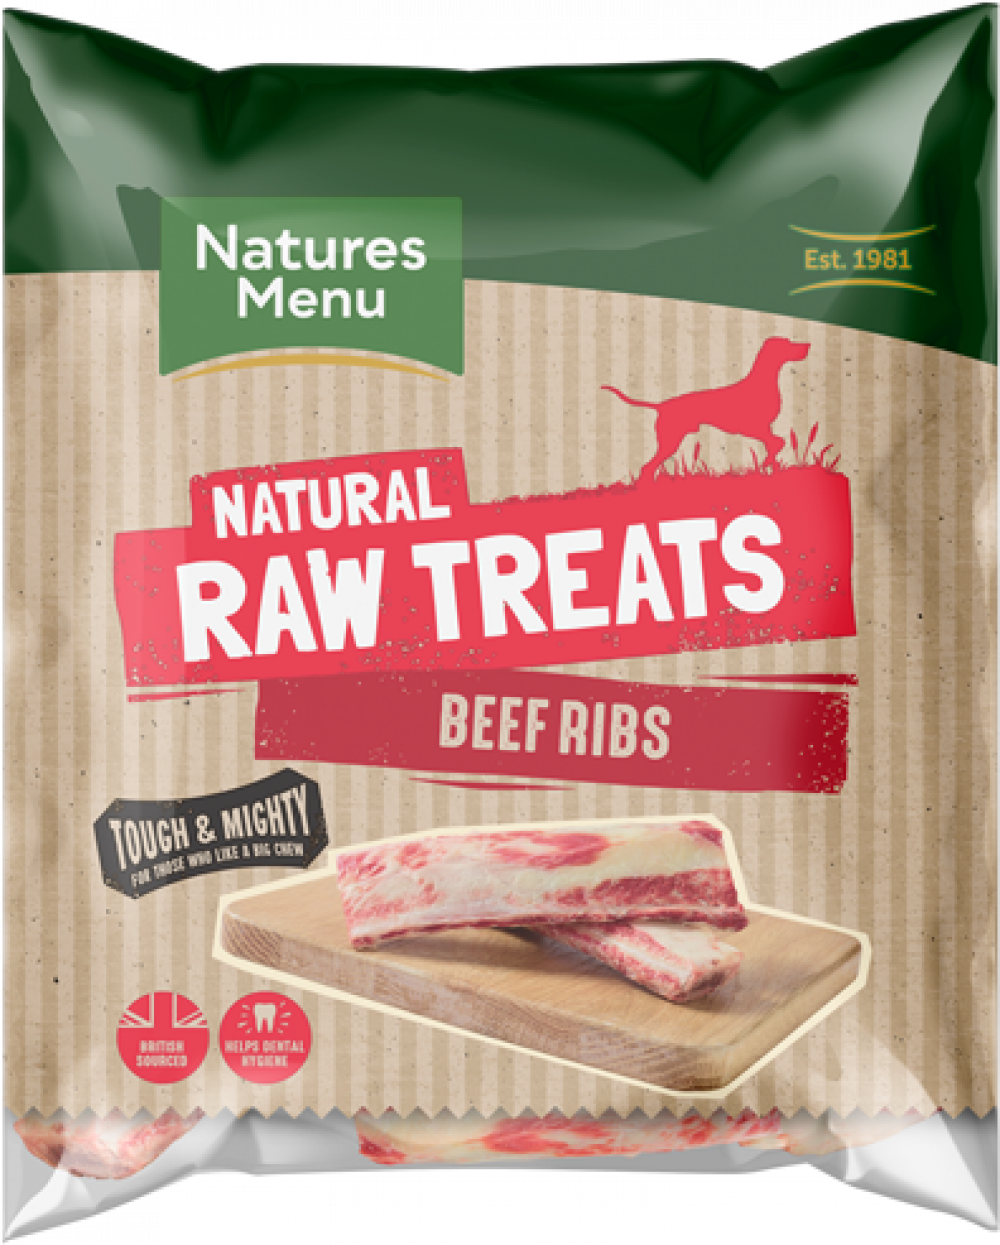 Natures Menu Beef ribs